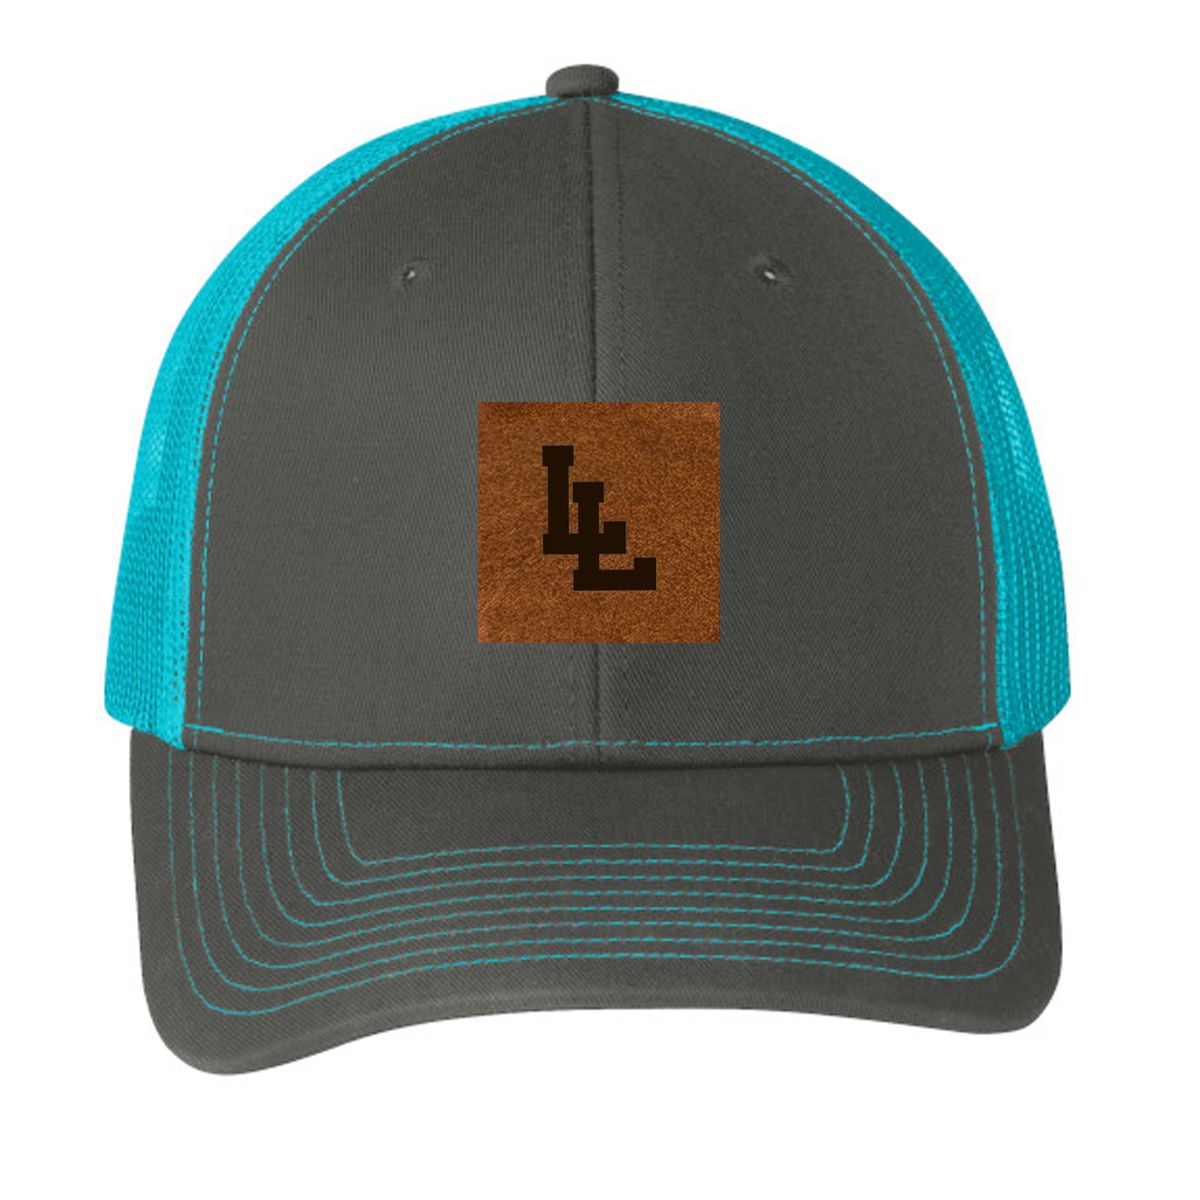 Layton High School - Trucker Cap